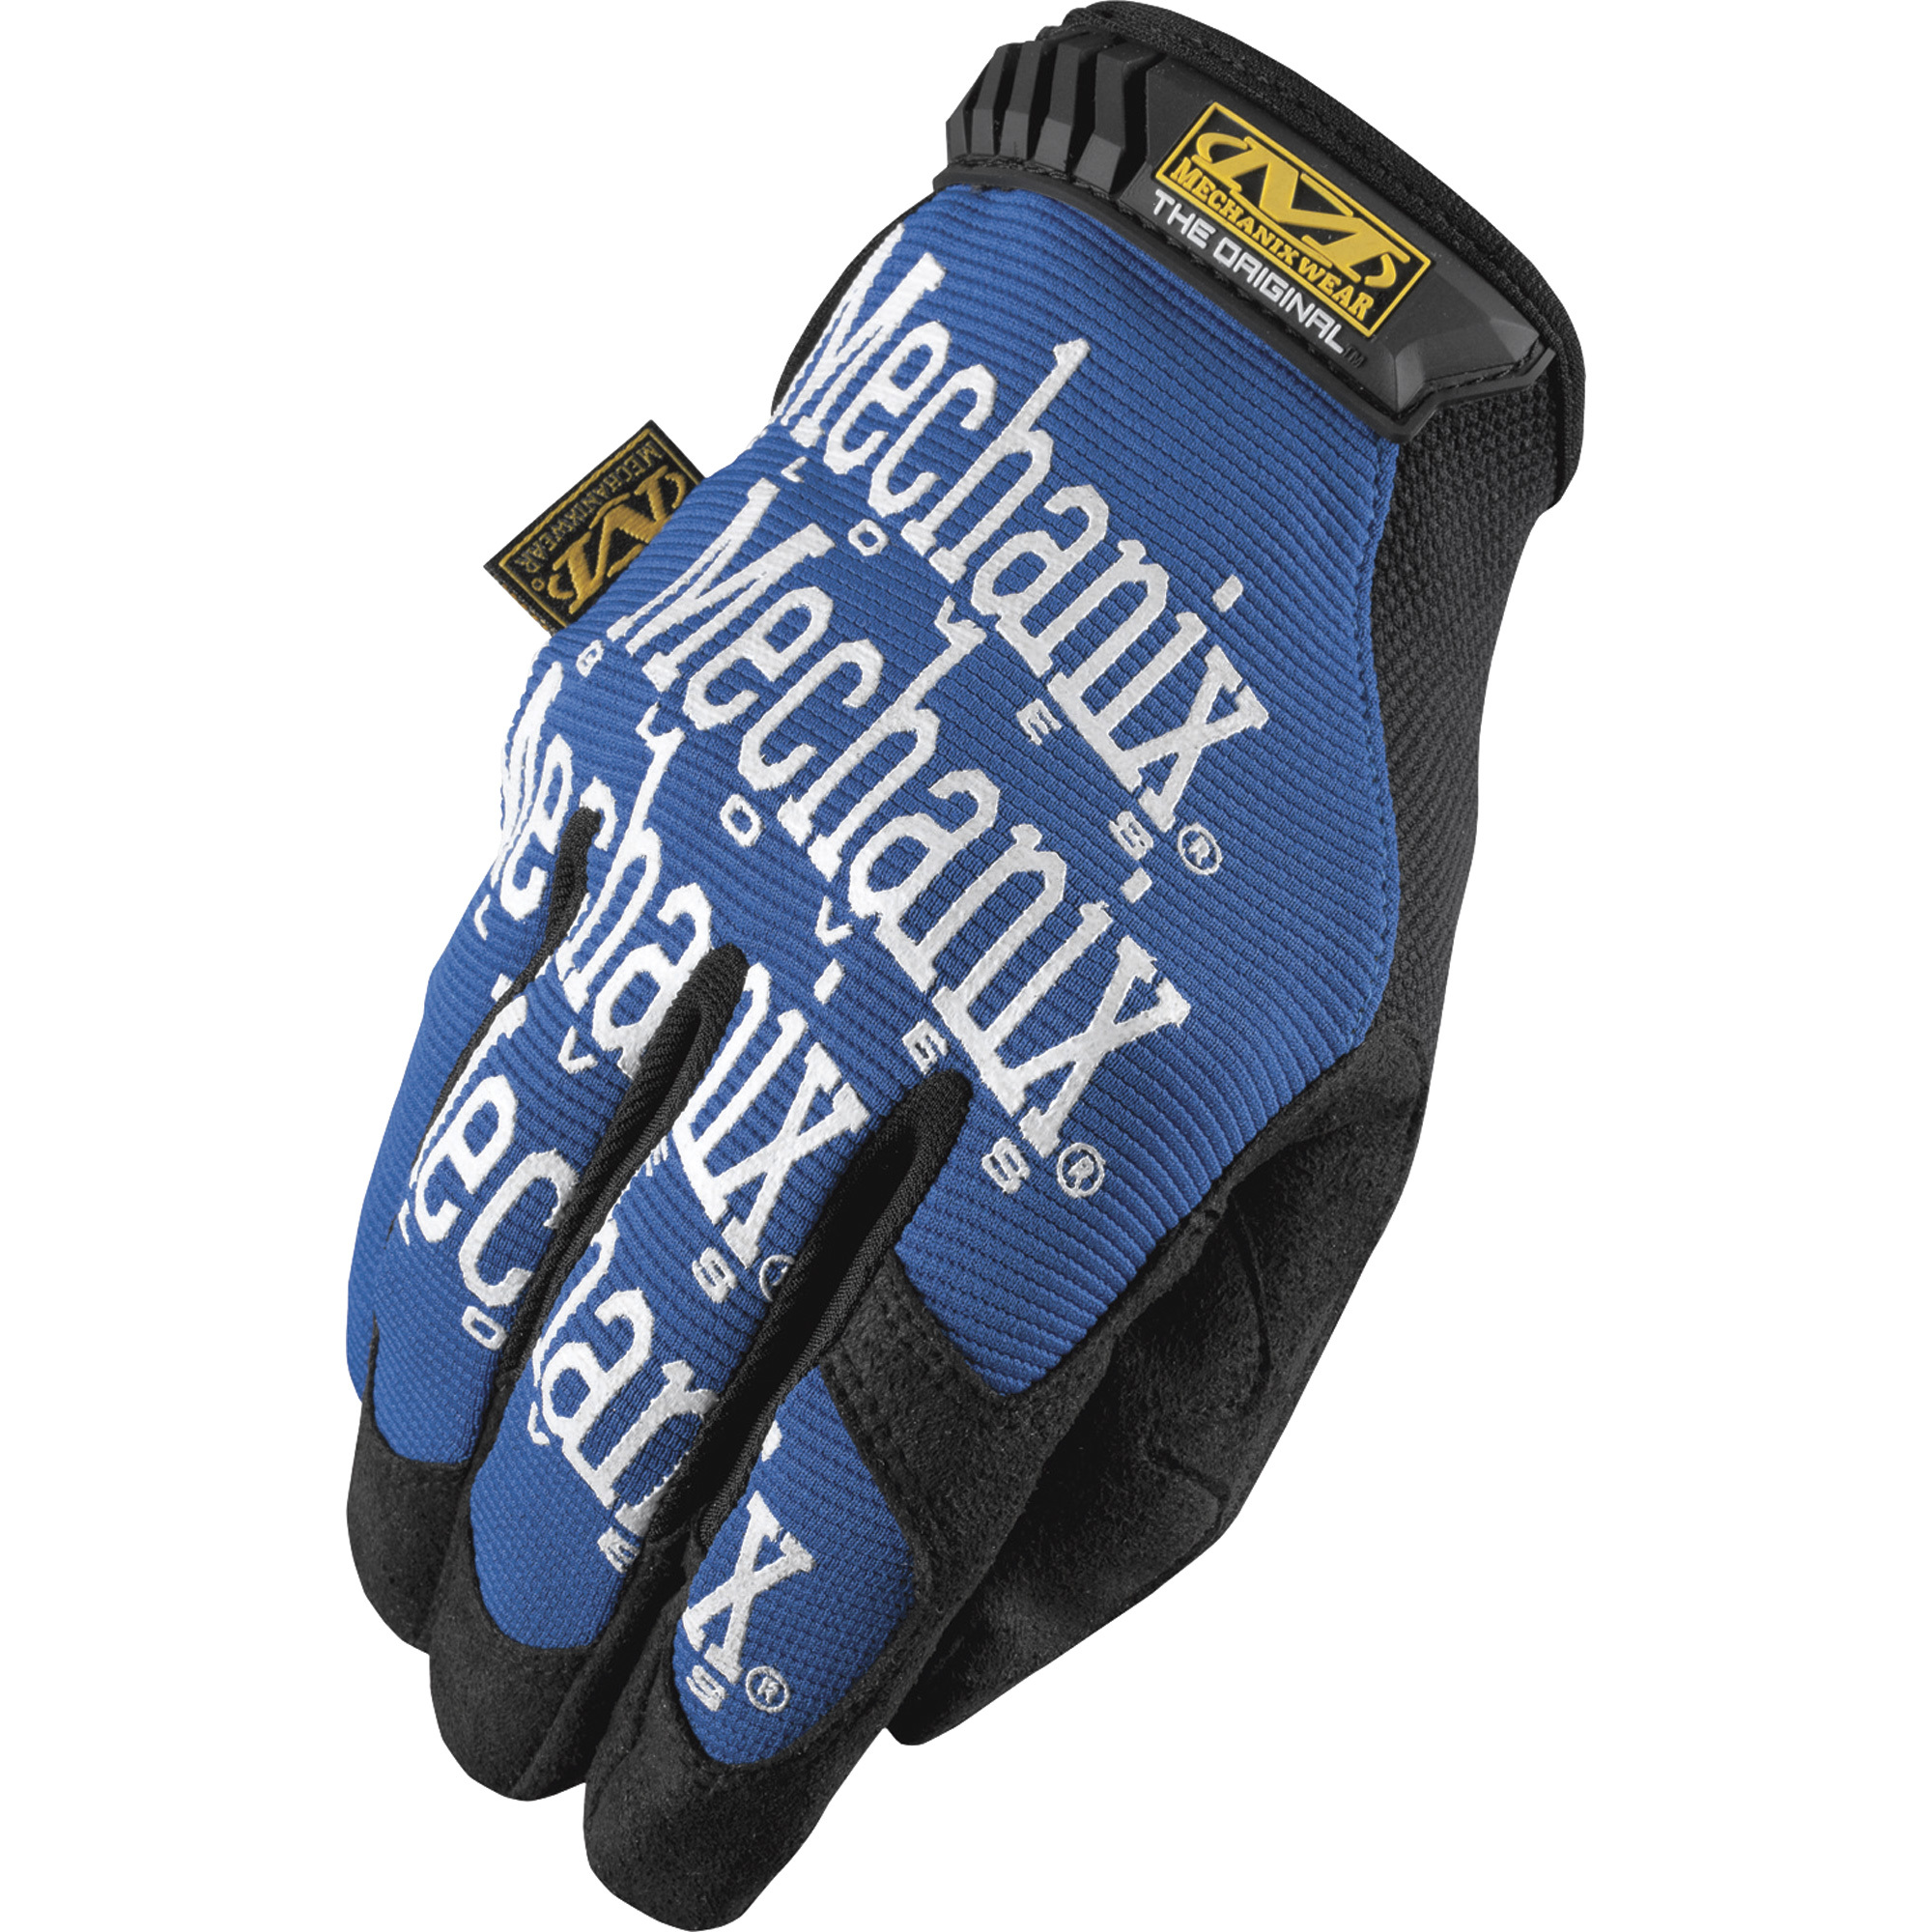 Mechanix Men's Wear Original Gloves - Blue, XL, Model MG-03-011